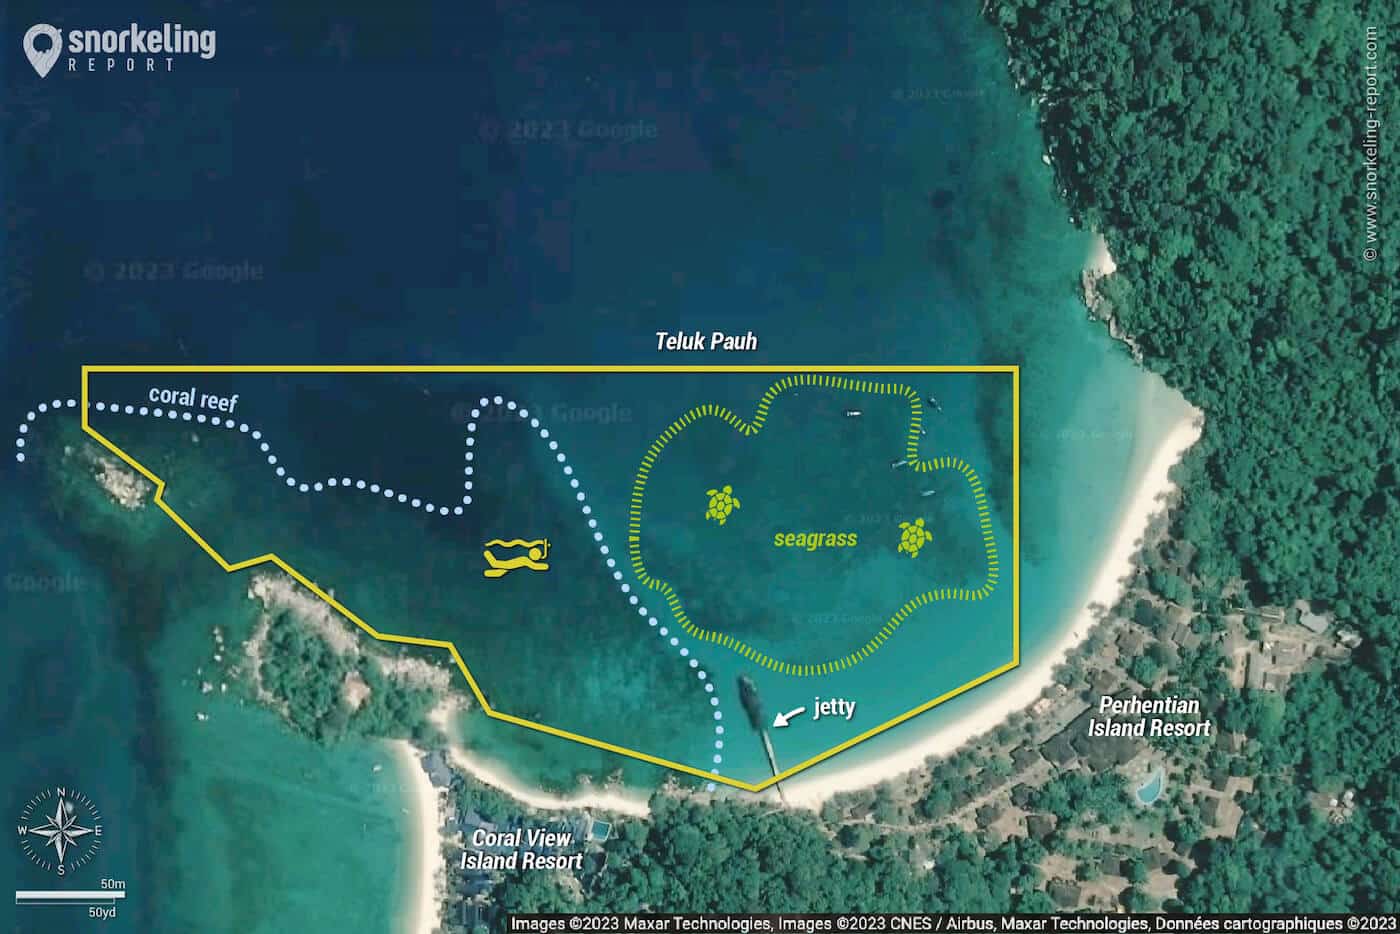 Teluk Pauh snorkeling map, Perhentian Island Resort